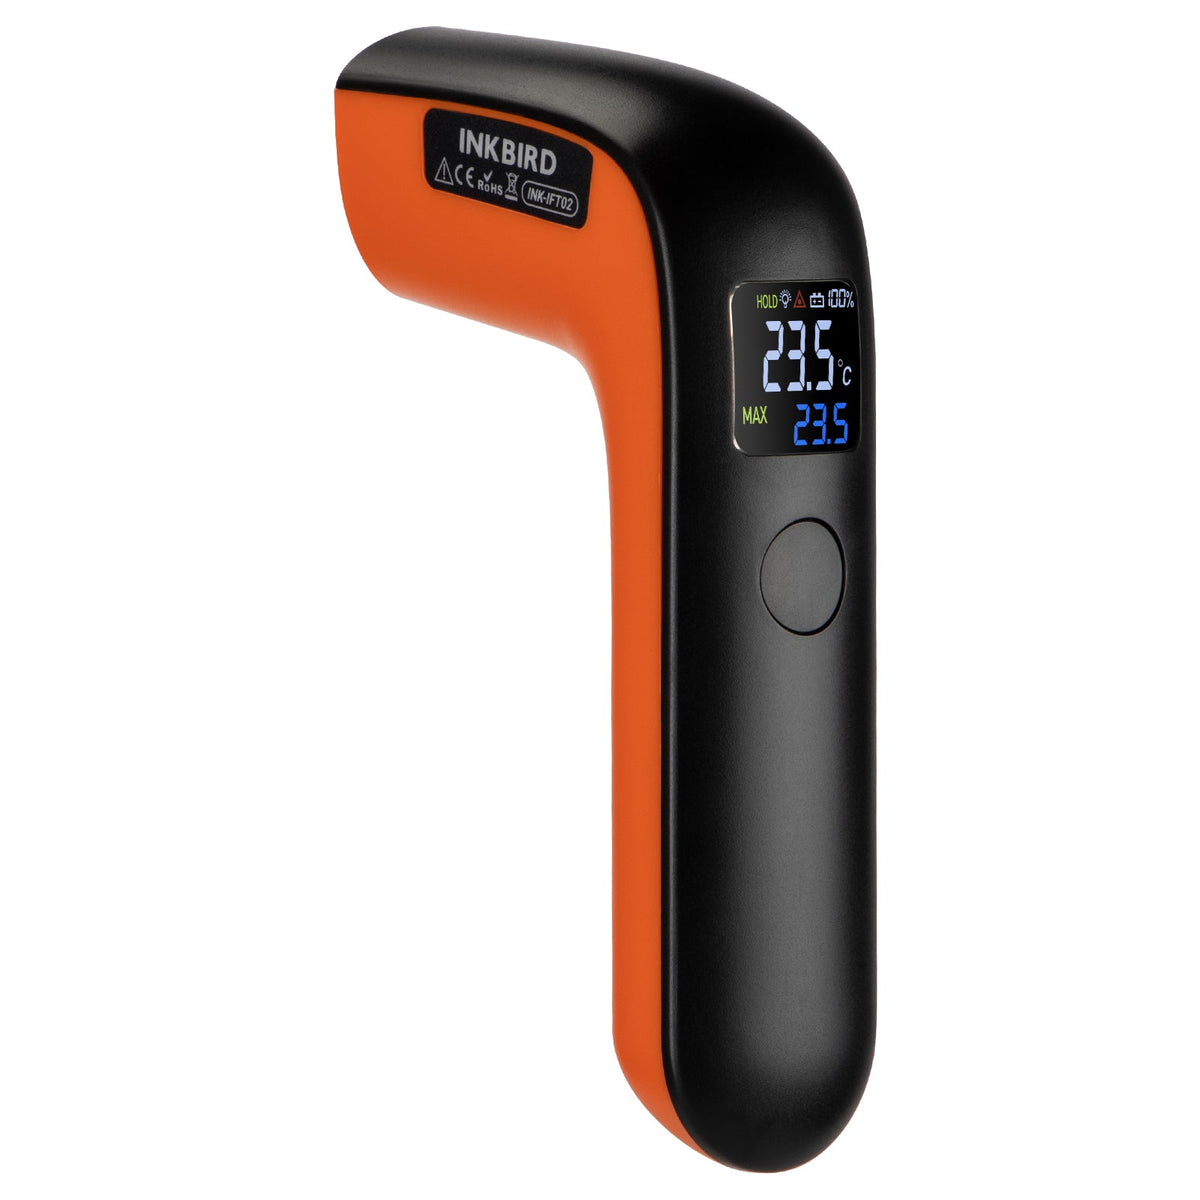 Thermopro Tp30 Digital Infrared Thermometer Gun Non Contact Laser  Temperature